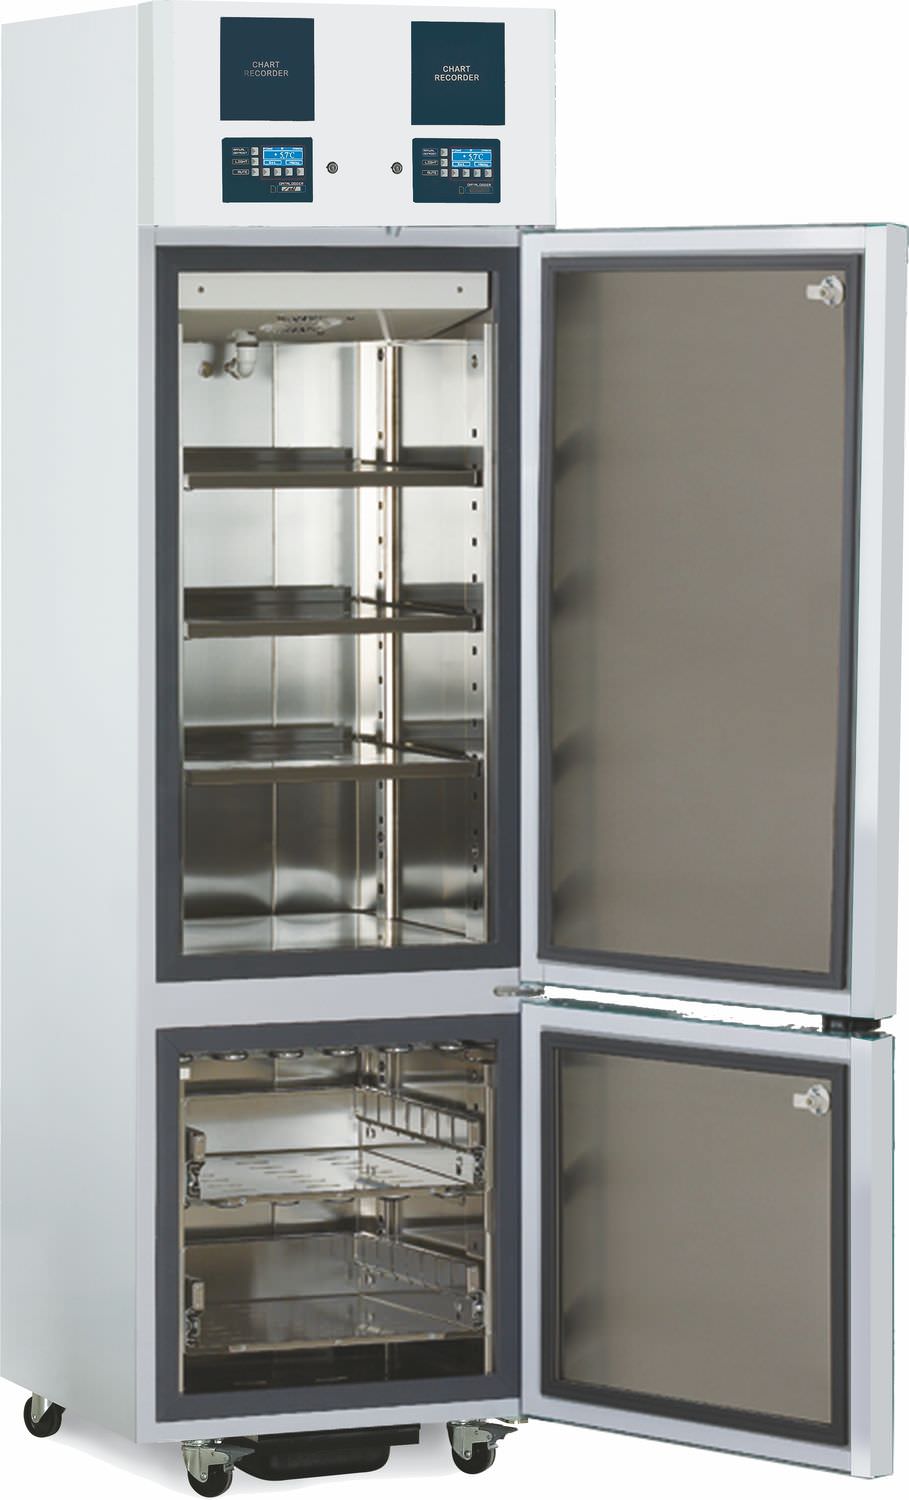 Laboratory refrigerator-freezer / upright / 2-door DS-FC39/2 Desmon Spa